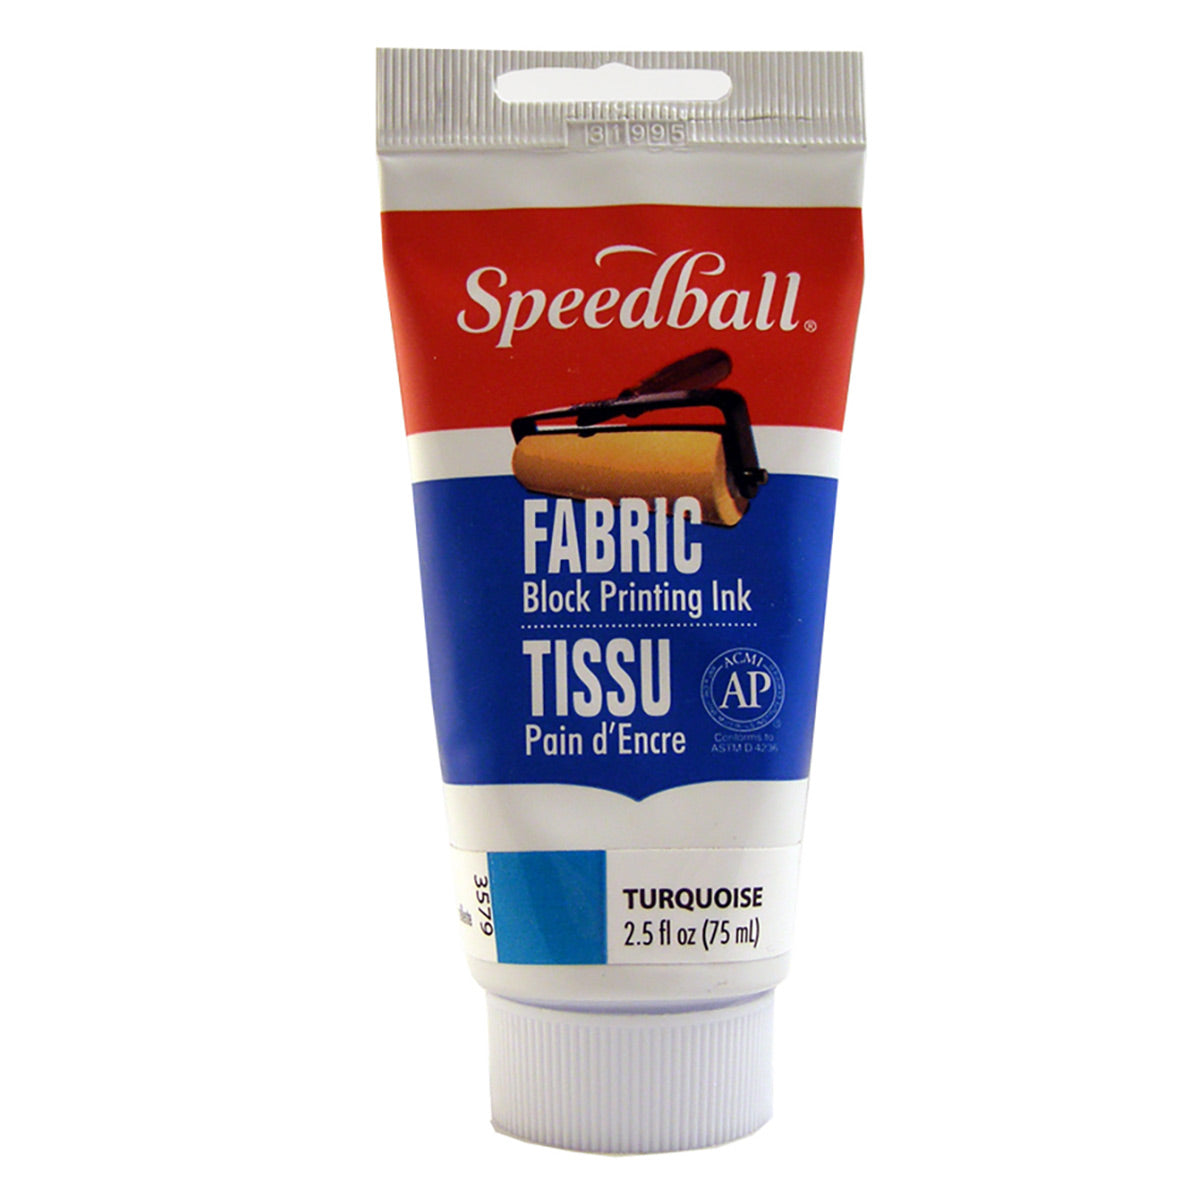 Speedball - Fabric Block Printing Ink 75ml (2.5oz) - Turquoise